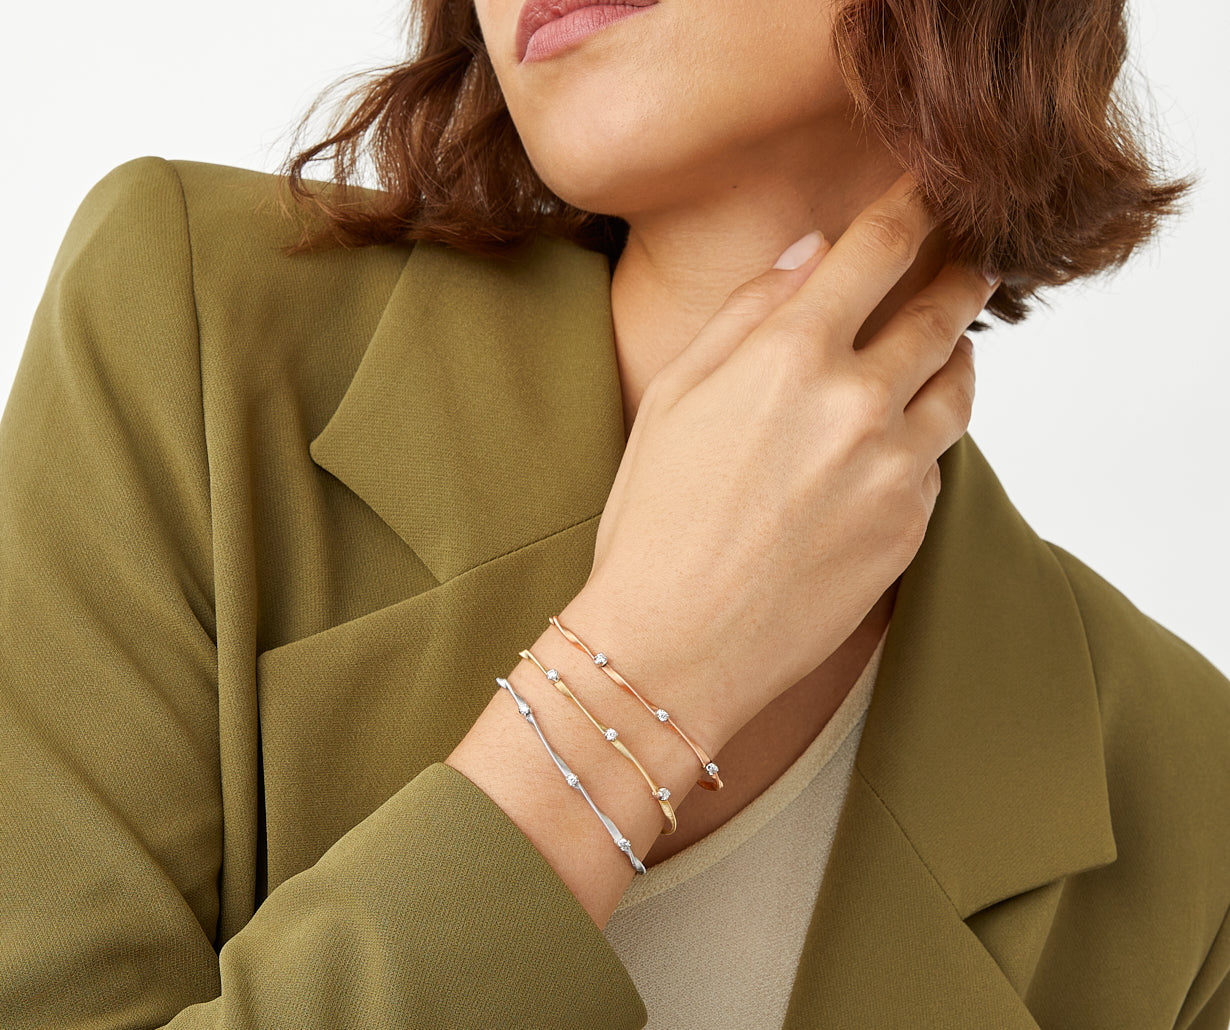 Marrakech Bracelet in 18k White Gold with Diamonds Single Strand - Orsini Jewellers NZ